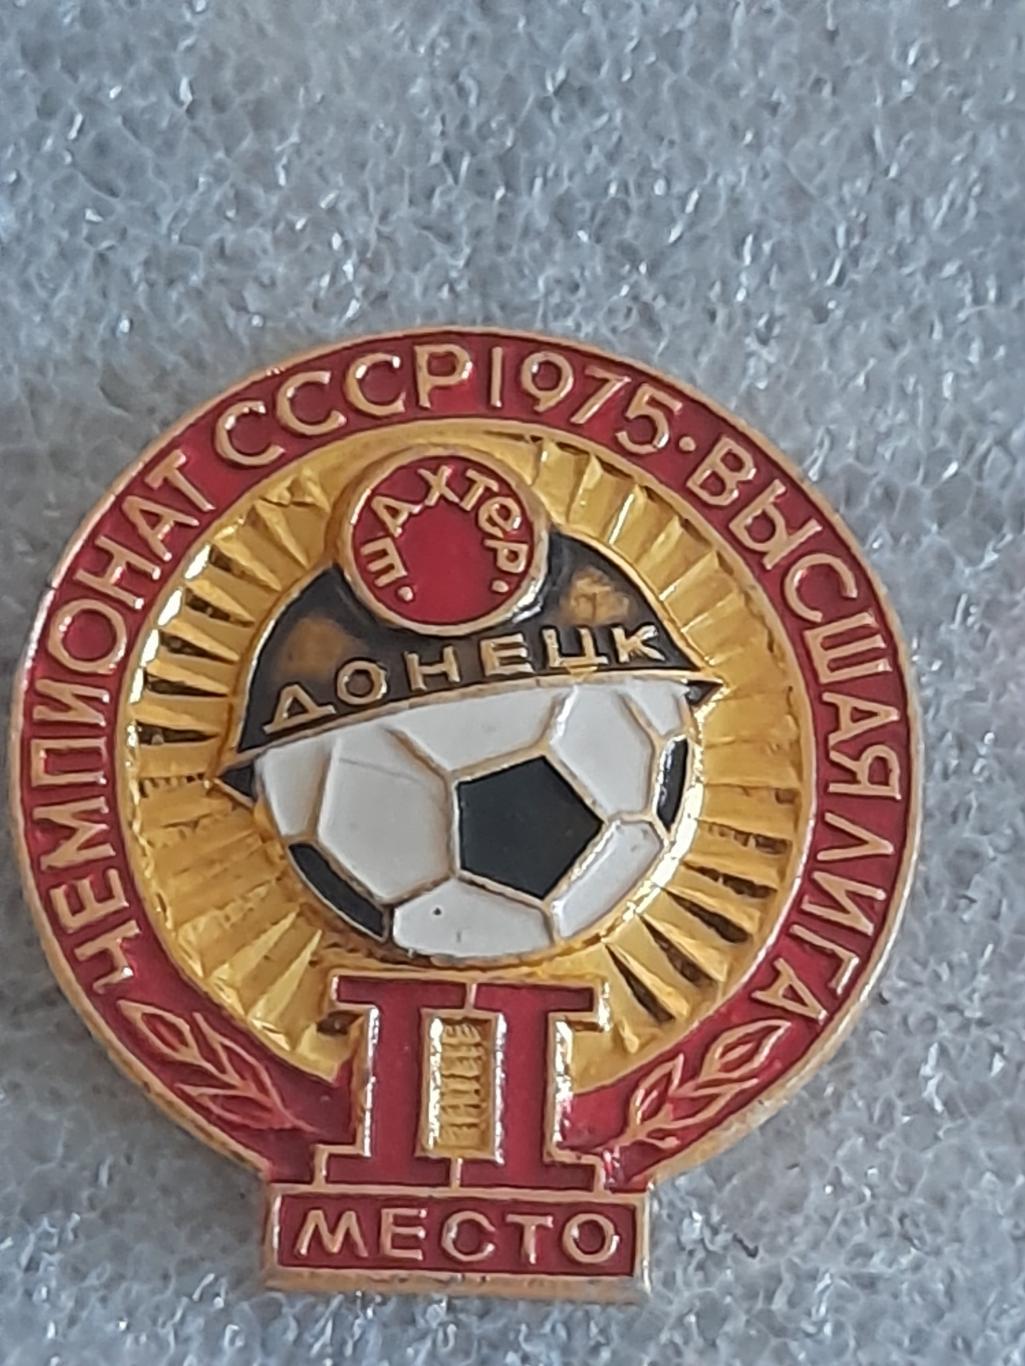 ФК Шахтер, Донецк (Украина) / FC Shakhtar, Donetsk, Ukraine(3)